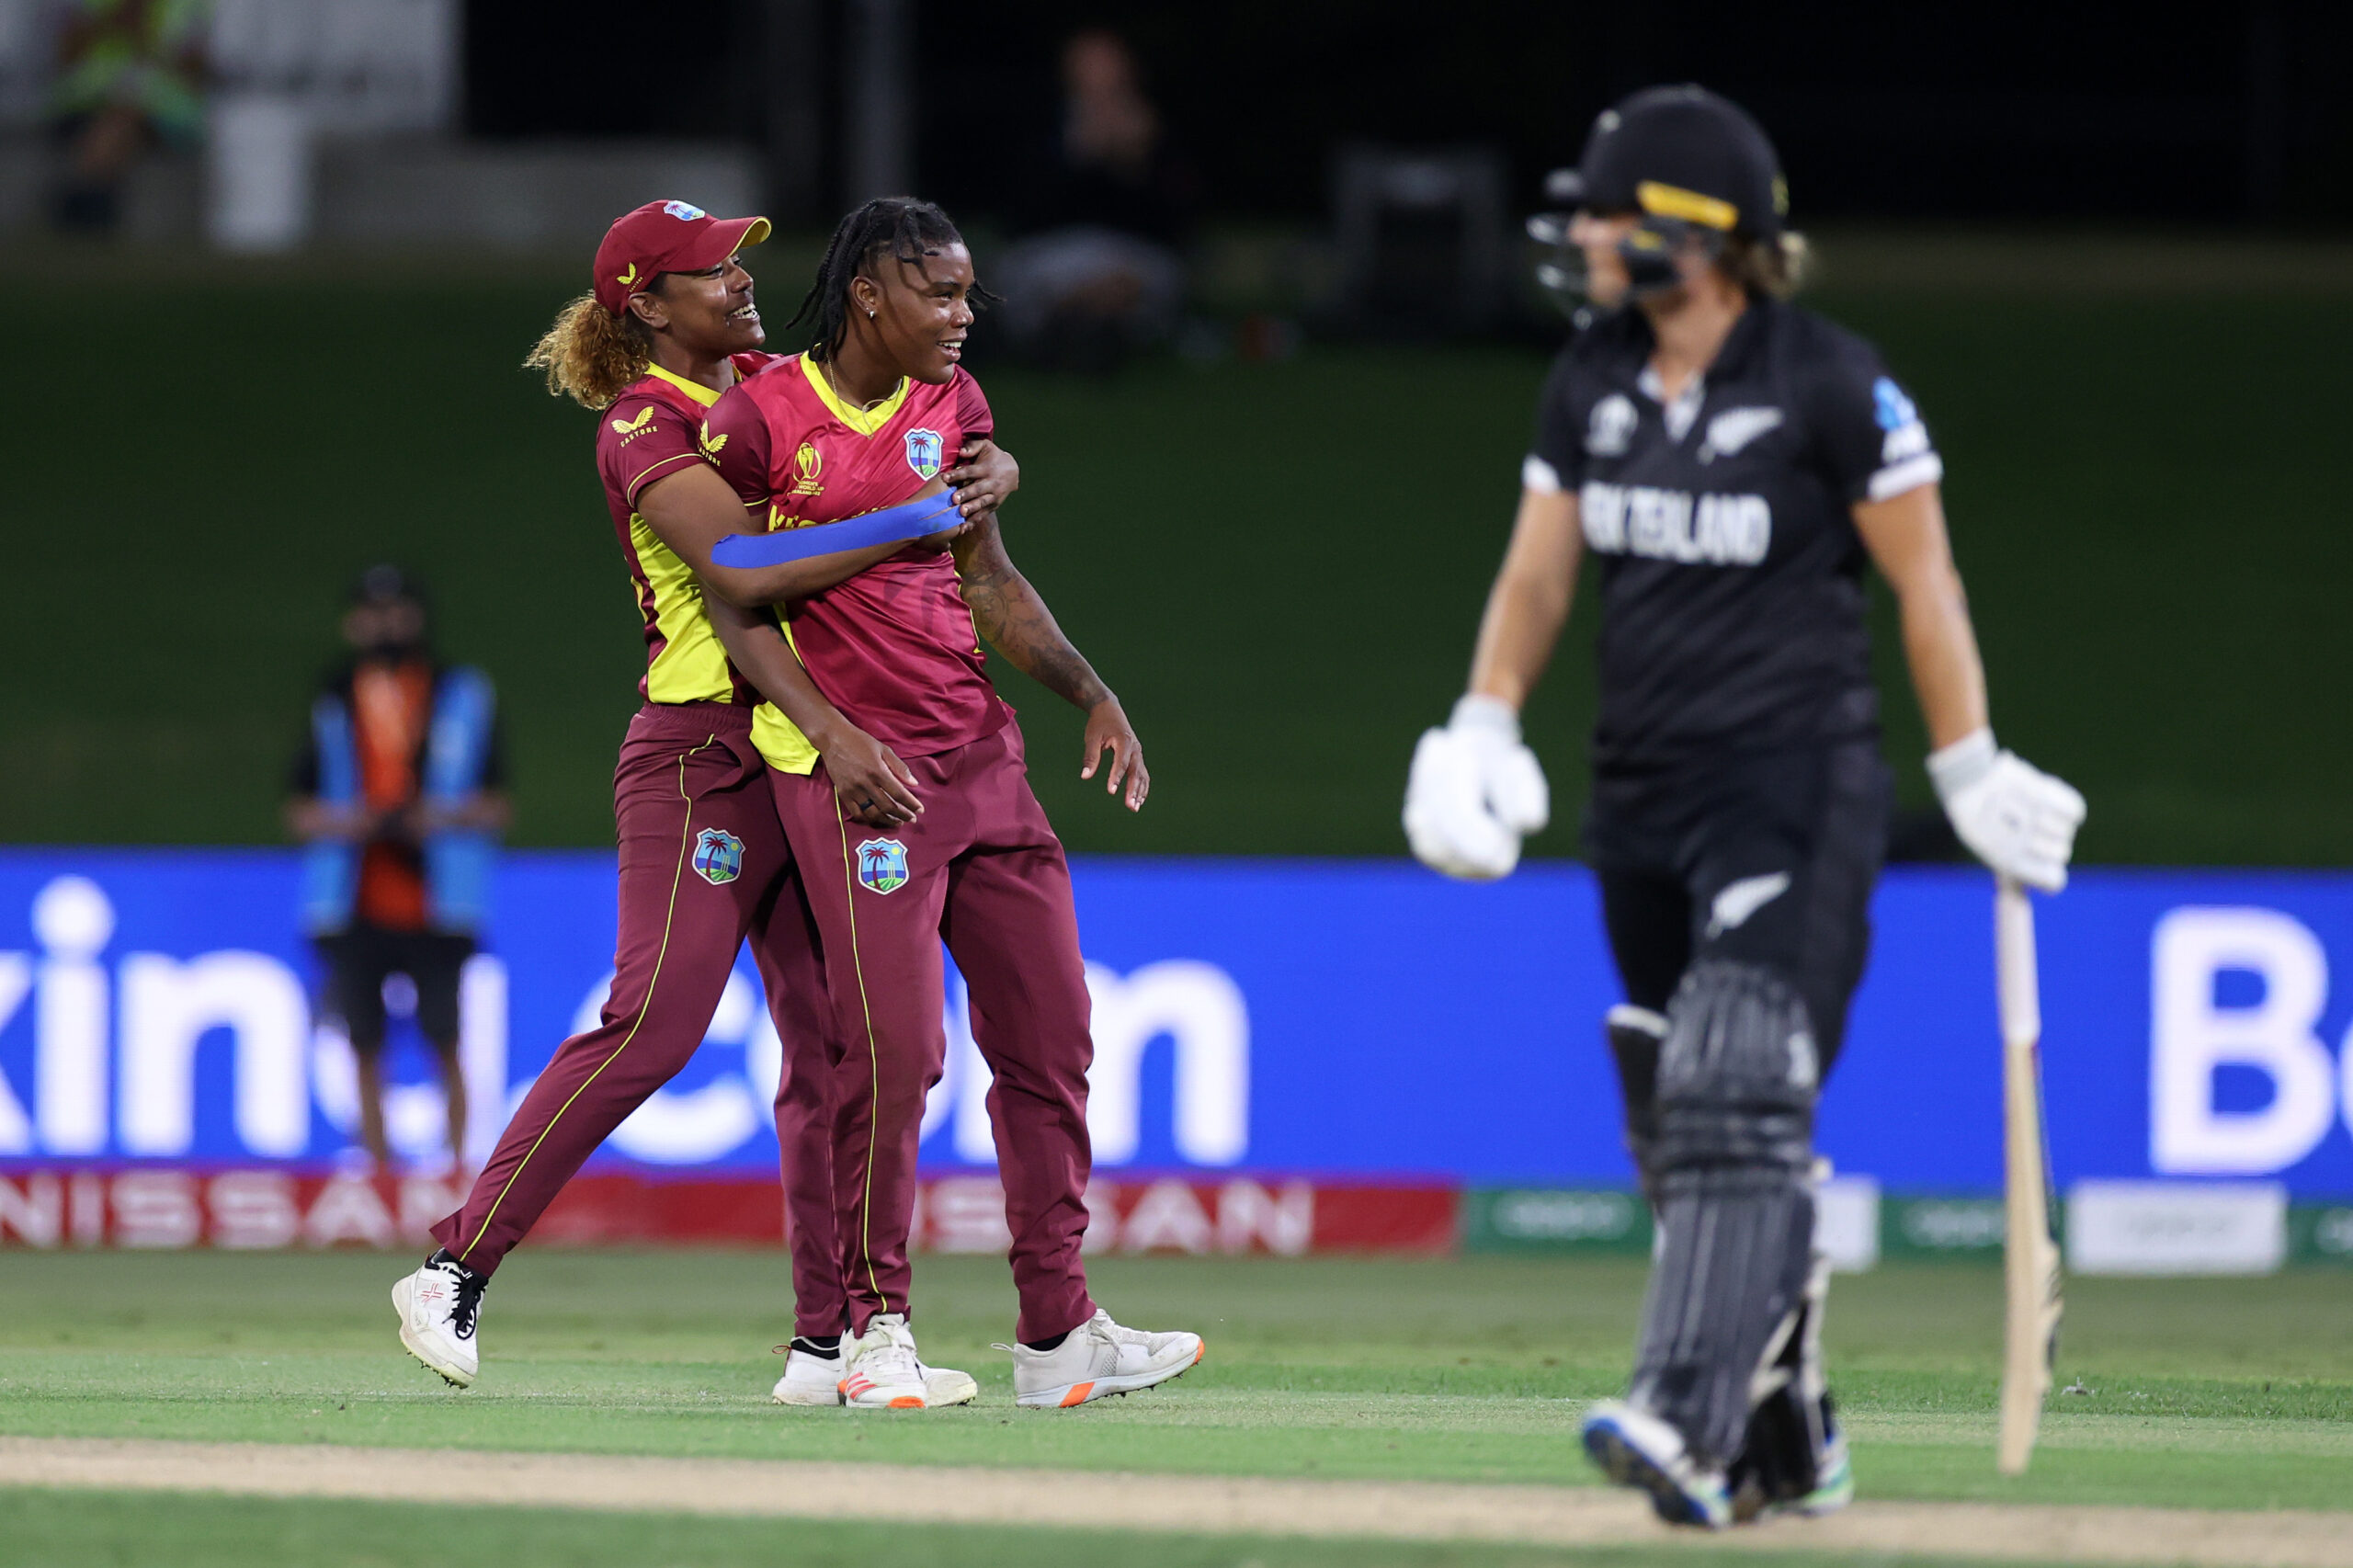  West Indies women’s  defeated New Zealand women’s  by 3 runs.